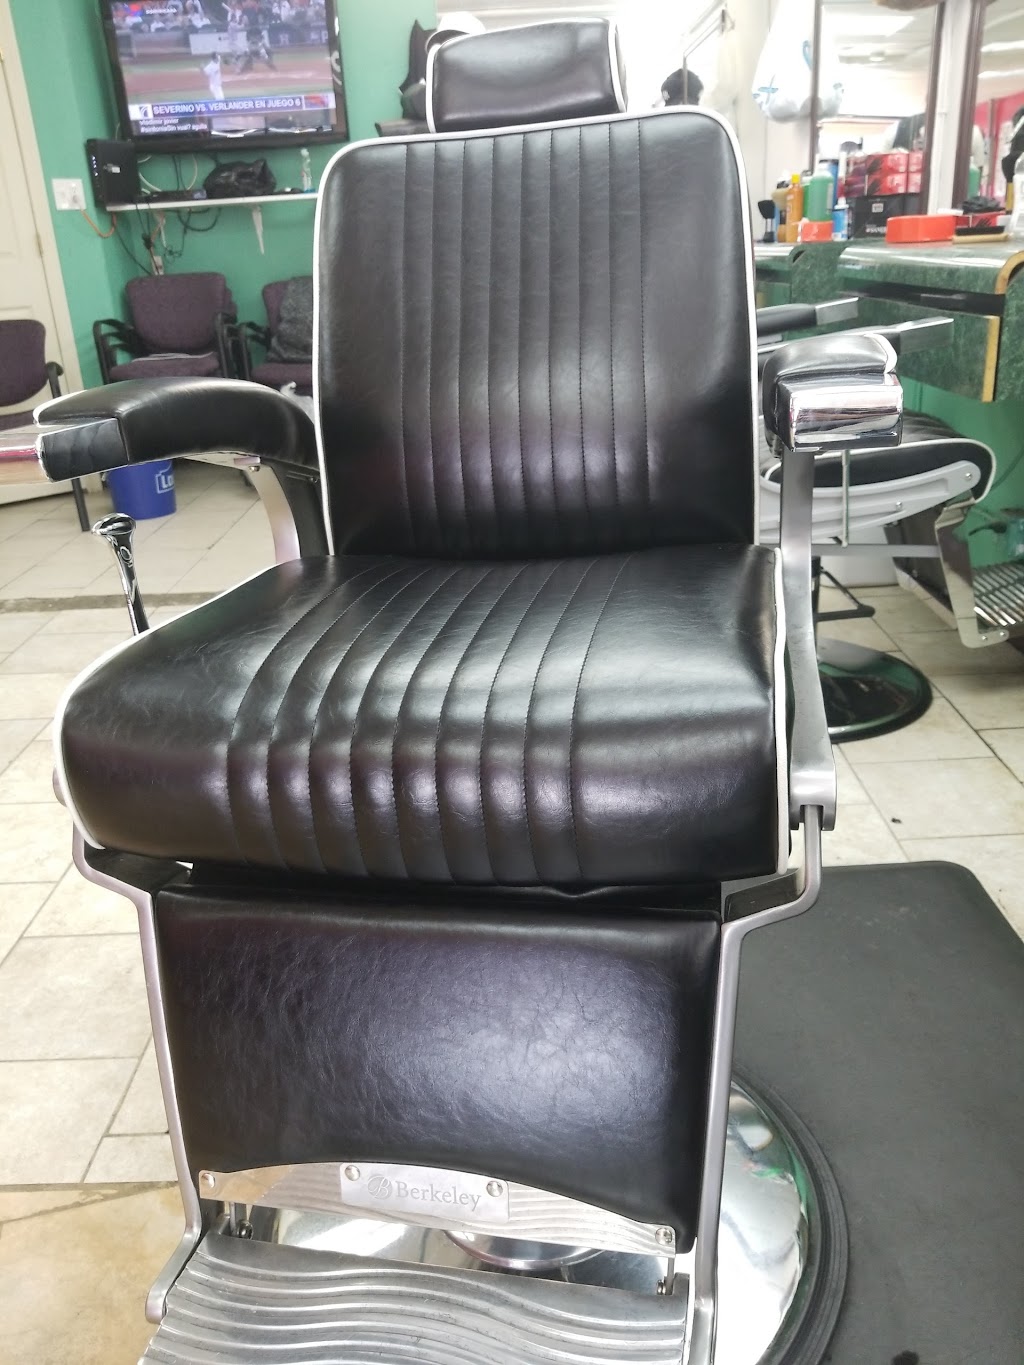 Primos Barber Shop | 902 Morton St, Boston, MA 02126, USA | Phone: (857) 312-4409